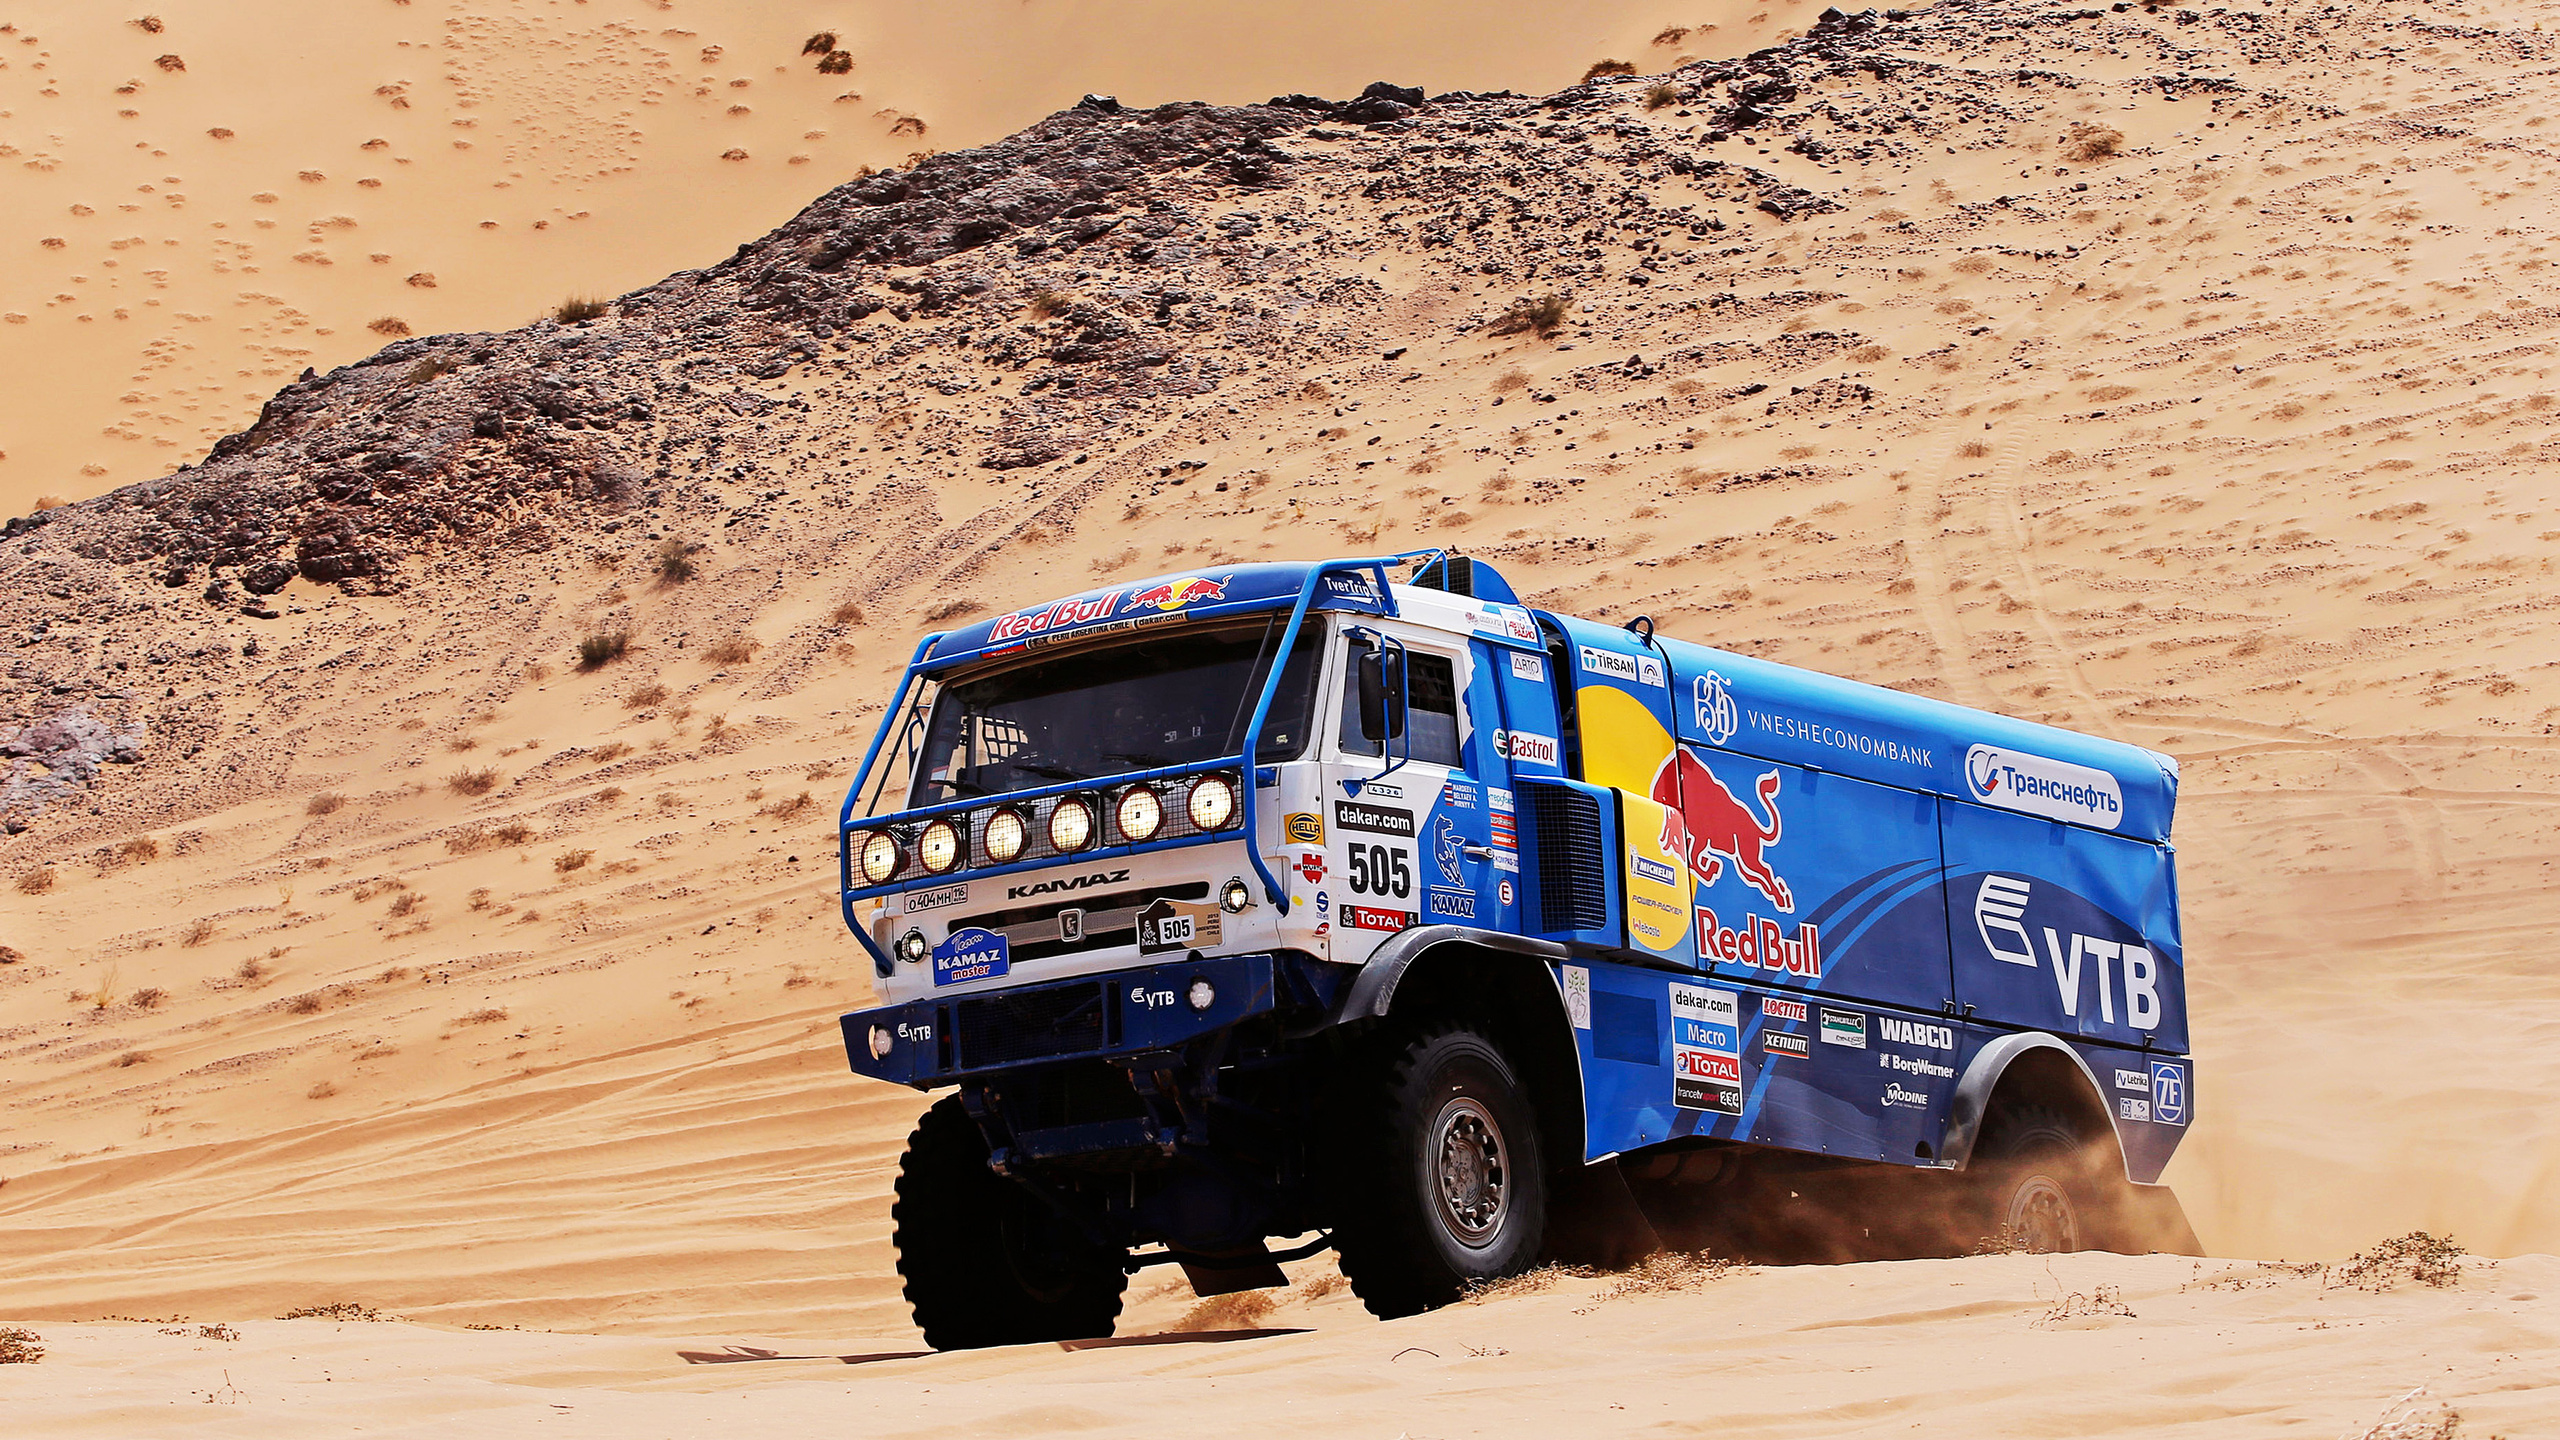 Blue and White Jeep Wrangler on Desert During Daytime. Wallpaper in 2560x1440 Resolution